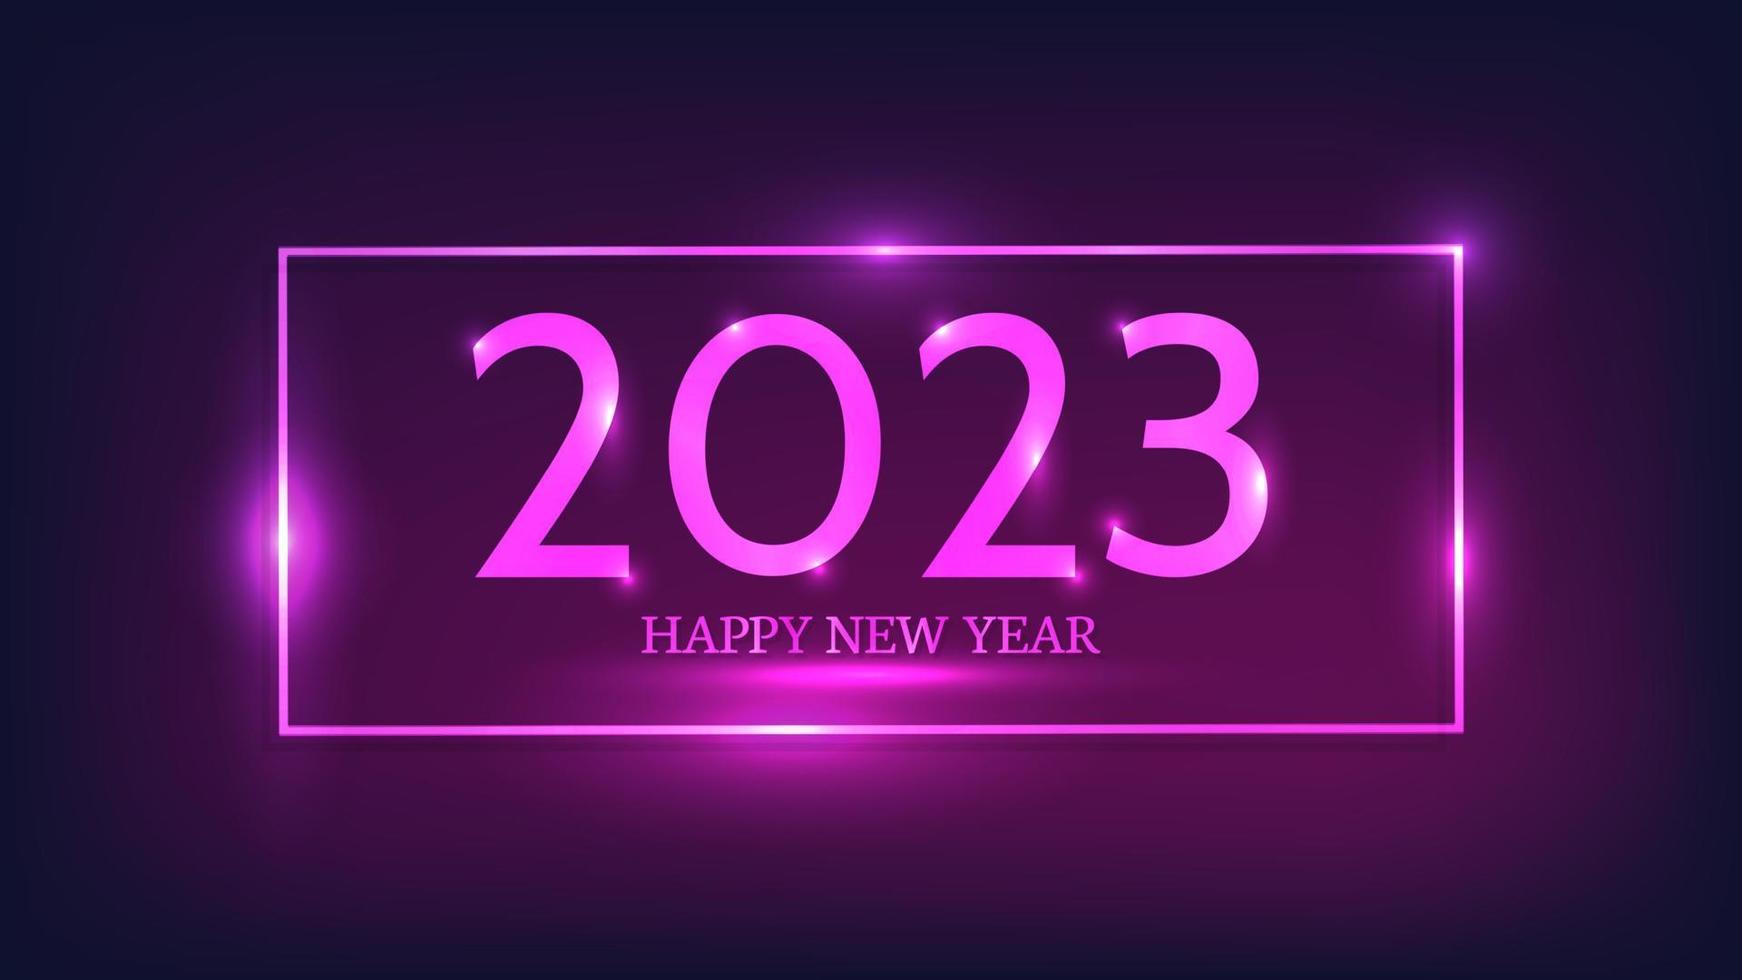 2023 feliz año nuevo fondo de neón. marco rectangular de neón con efectos brillantes para tarjetas de felicitación navideñas, volantes o carteles. ilustración vectorial vector